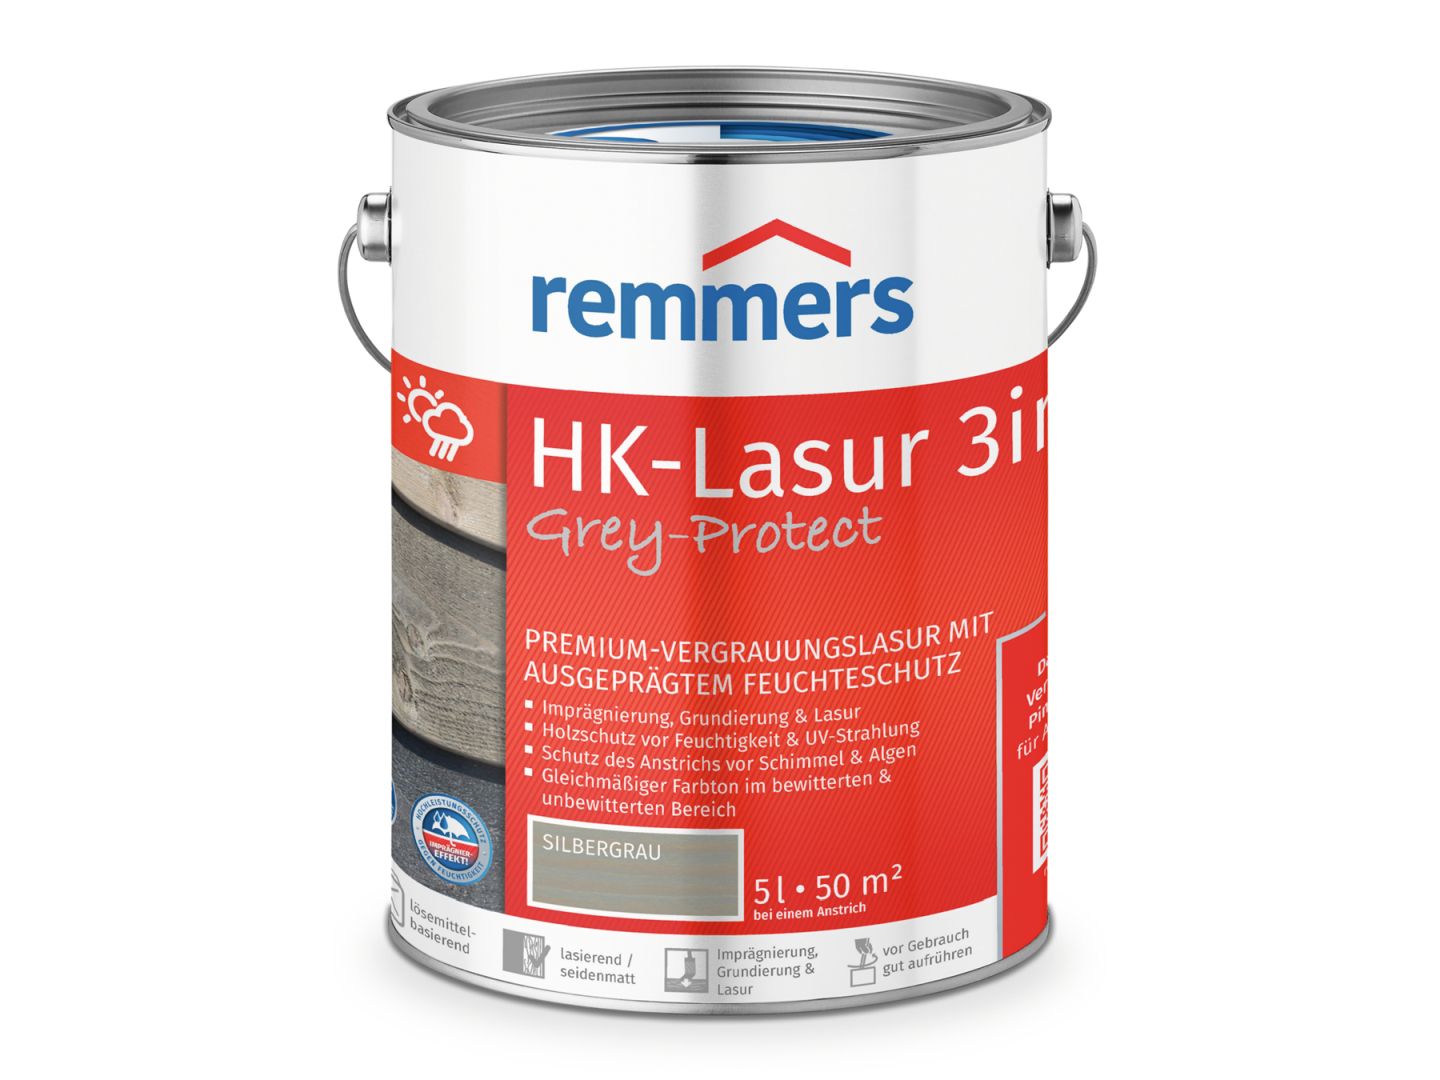 Remmers HK-Lasur 3in1 Grey-Protect, silbergrau (RC-970), 5 l